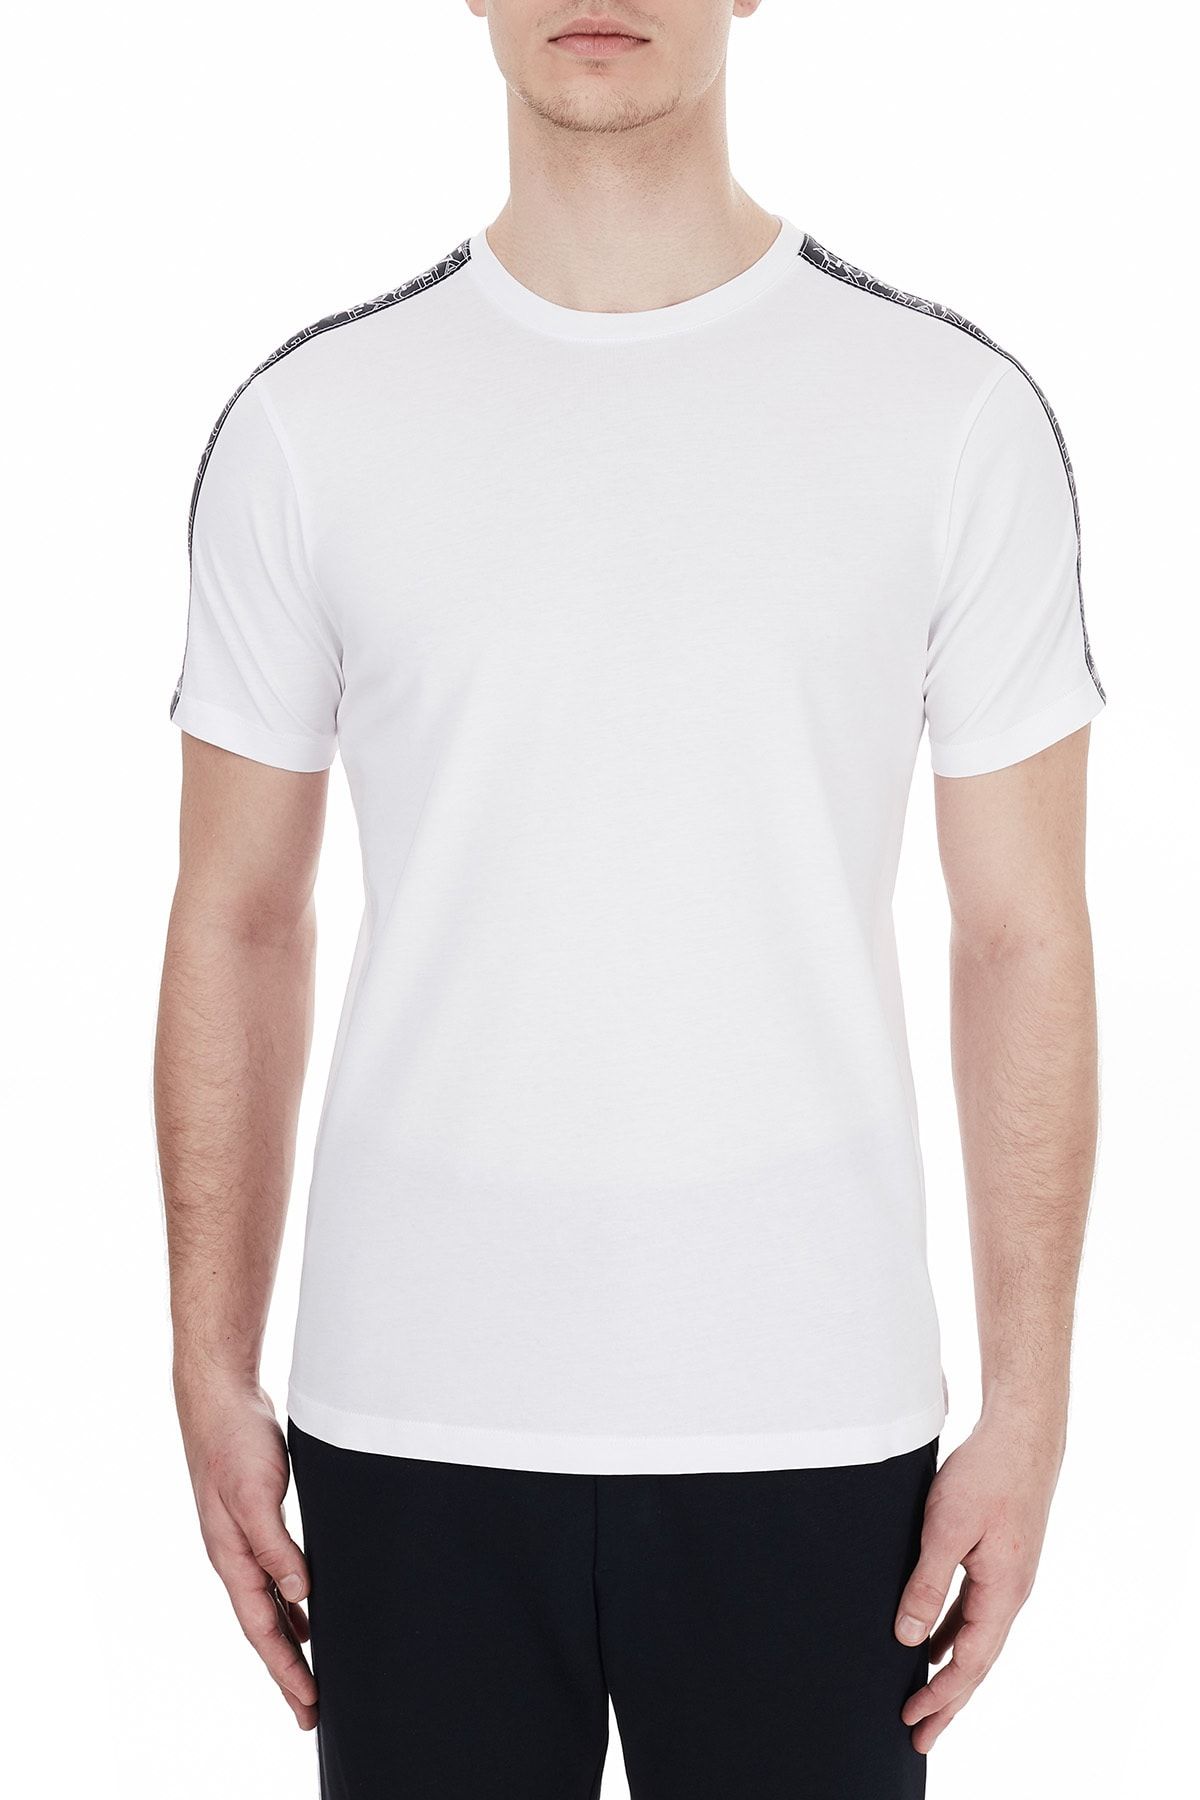 Armani Exchange Erkek Beyaz Pamuklu Bisiklet Yaka T-shirt 6hzmfm Zjh4z 1100